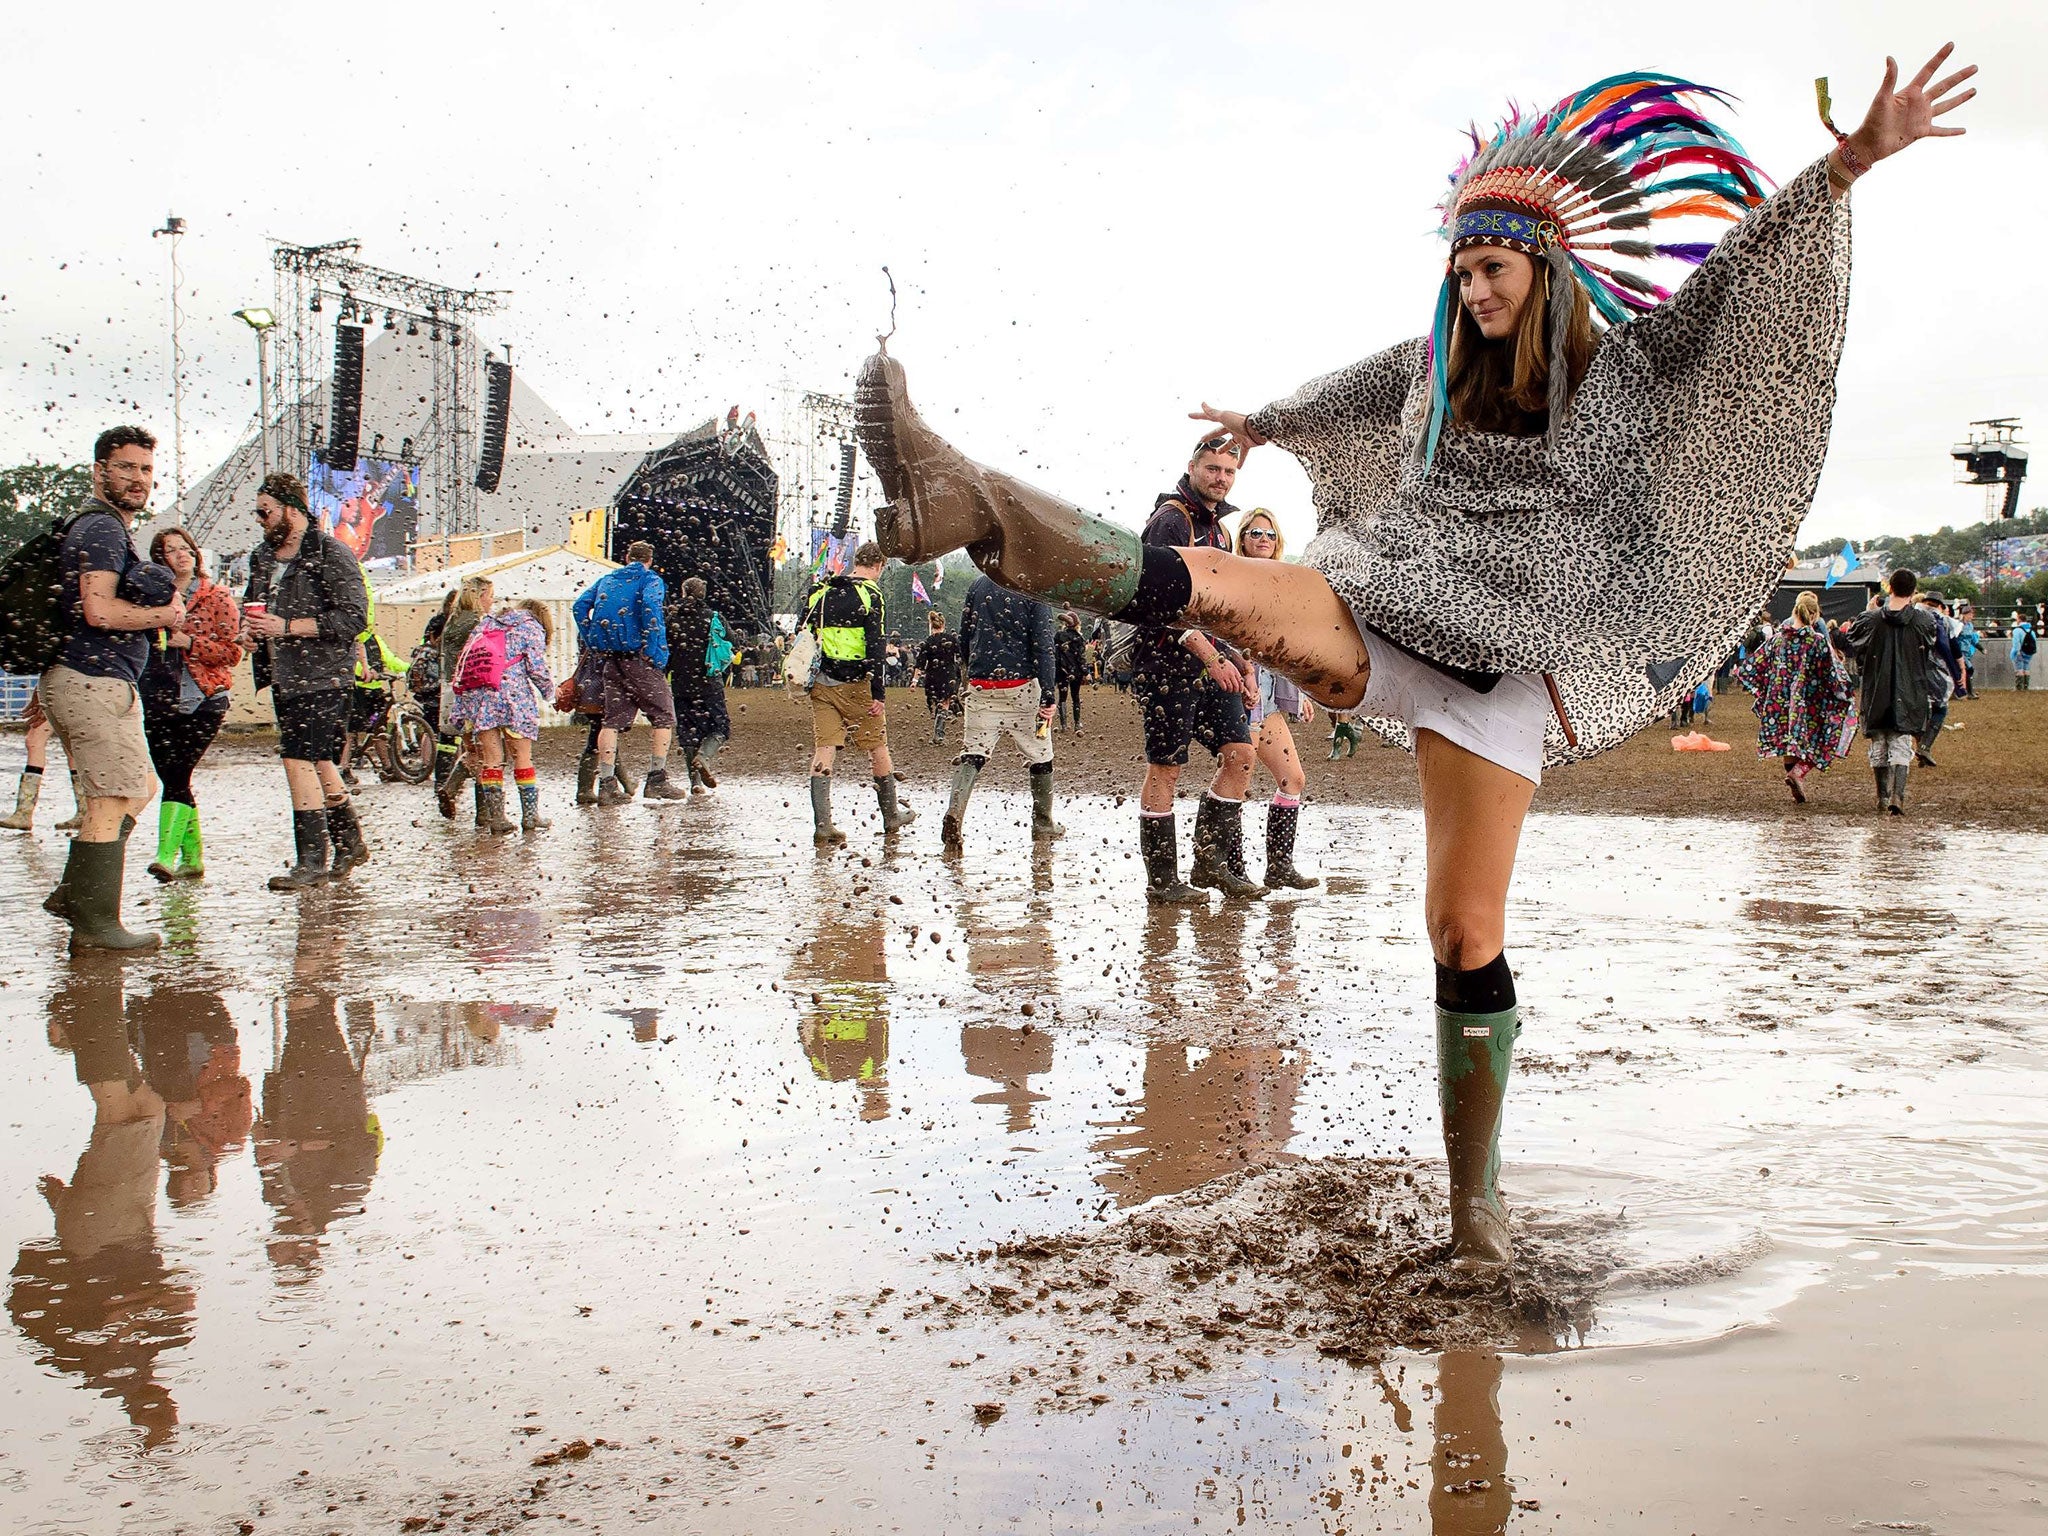 Festival-goers enjoy the mud at Glastonbury Festival